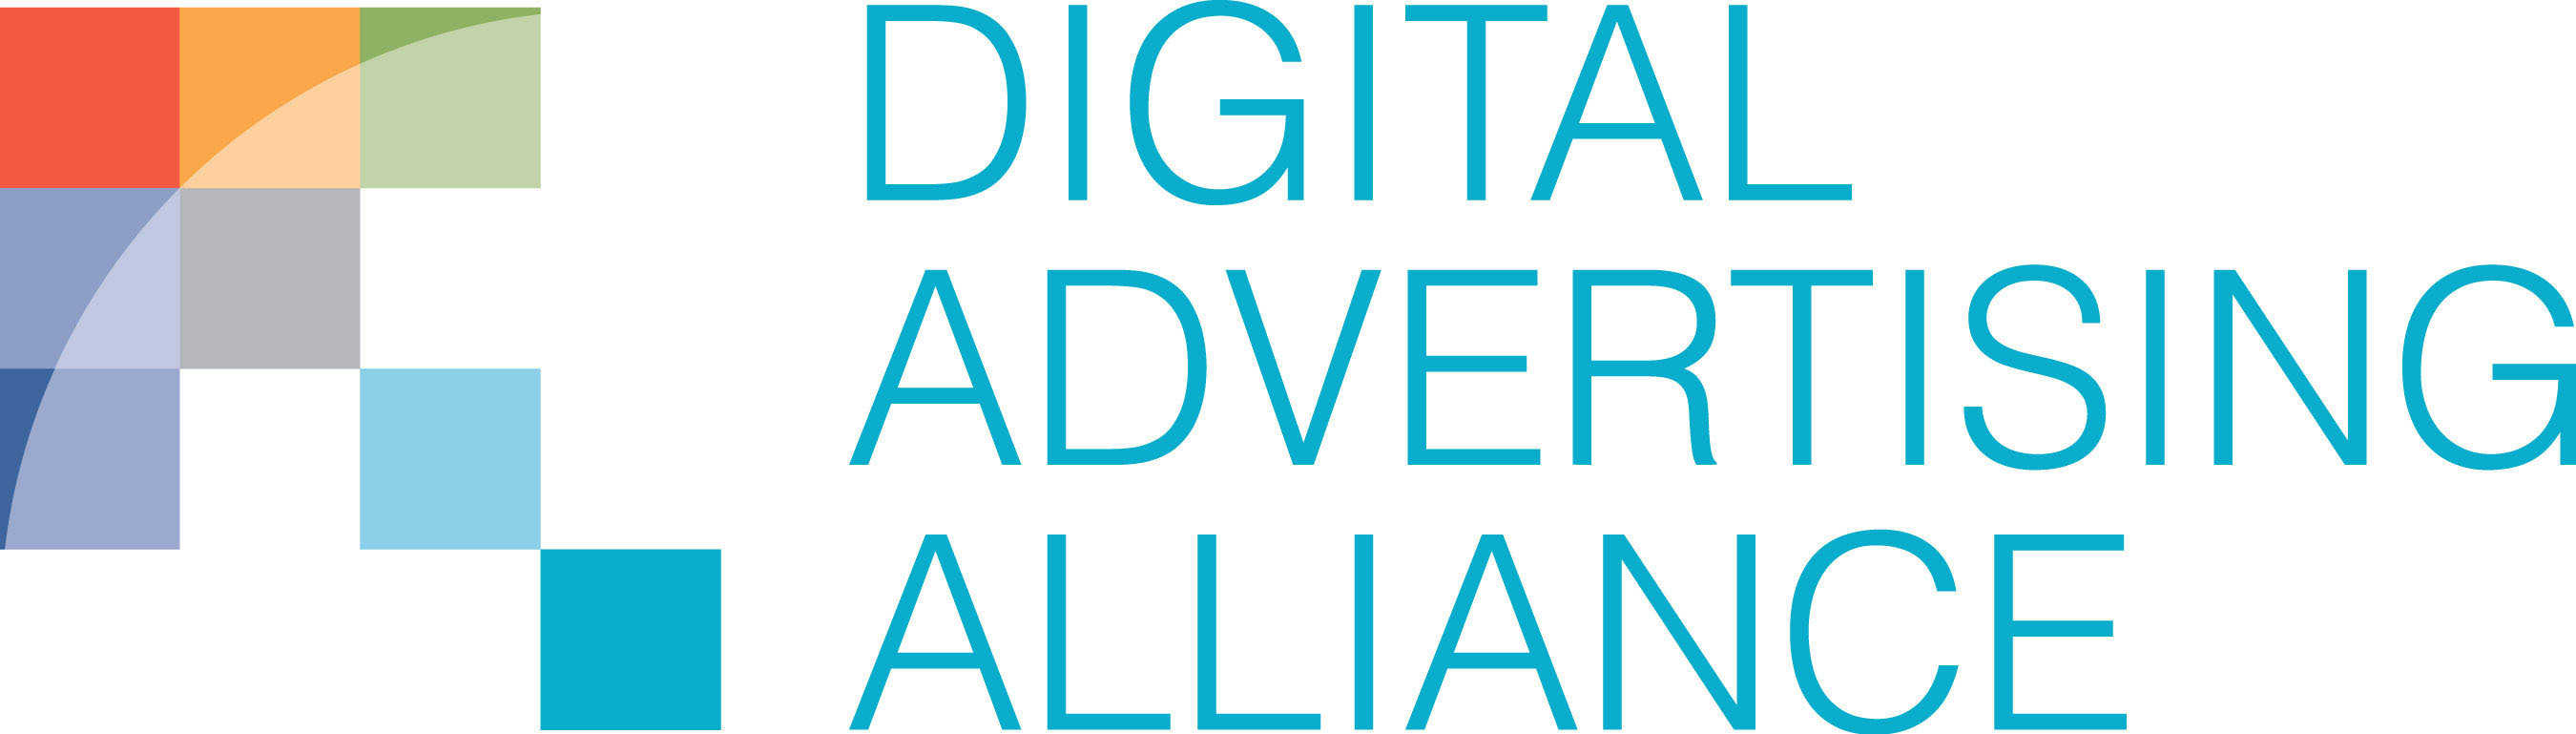 Digital Advertising Alliance (DAA).